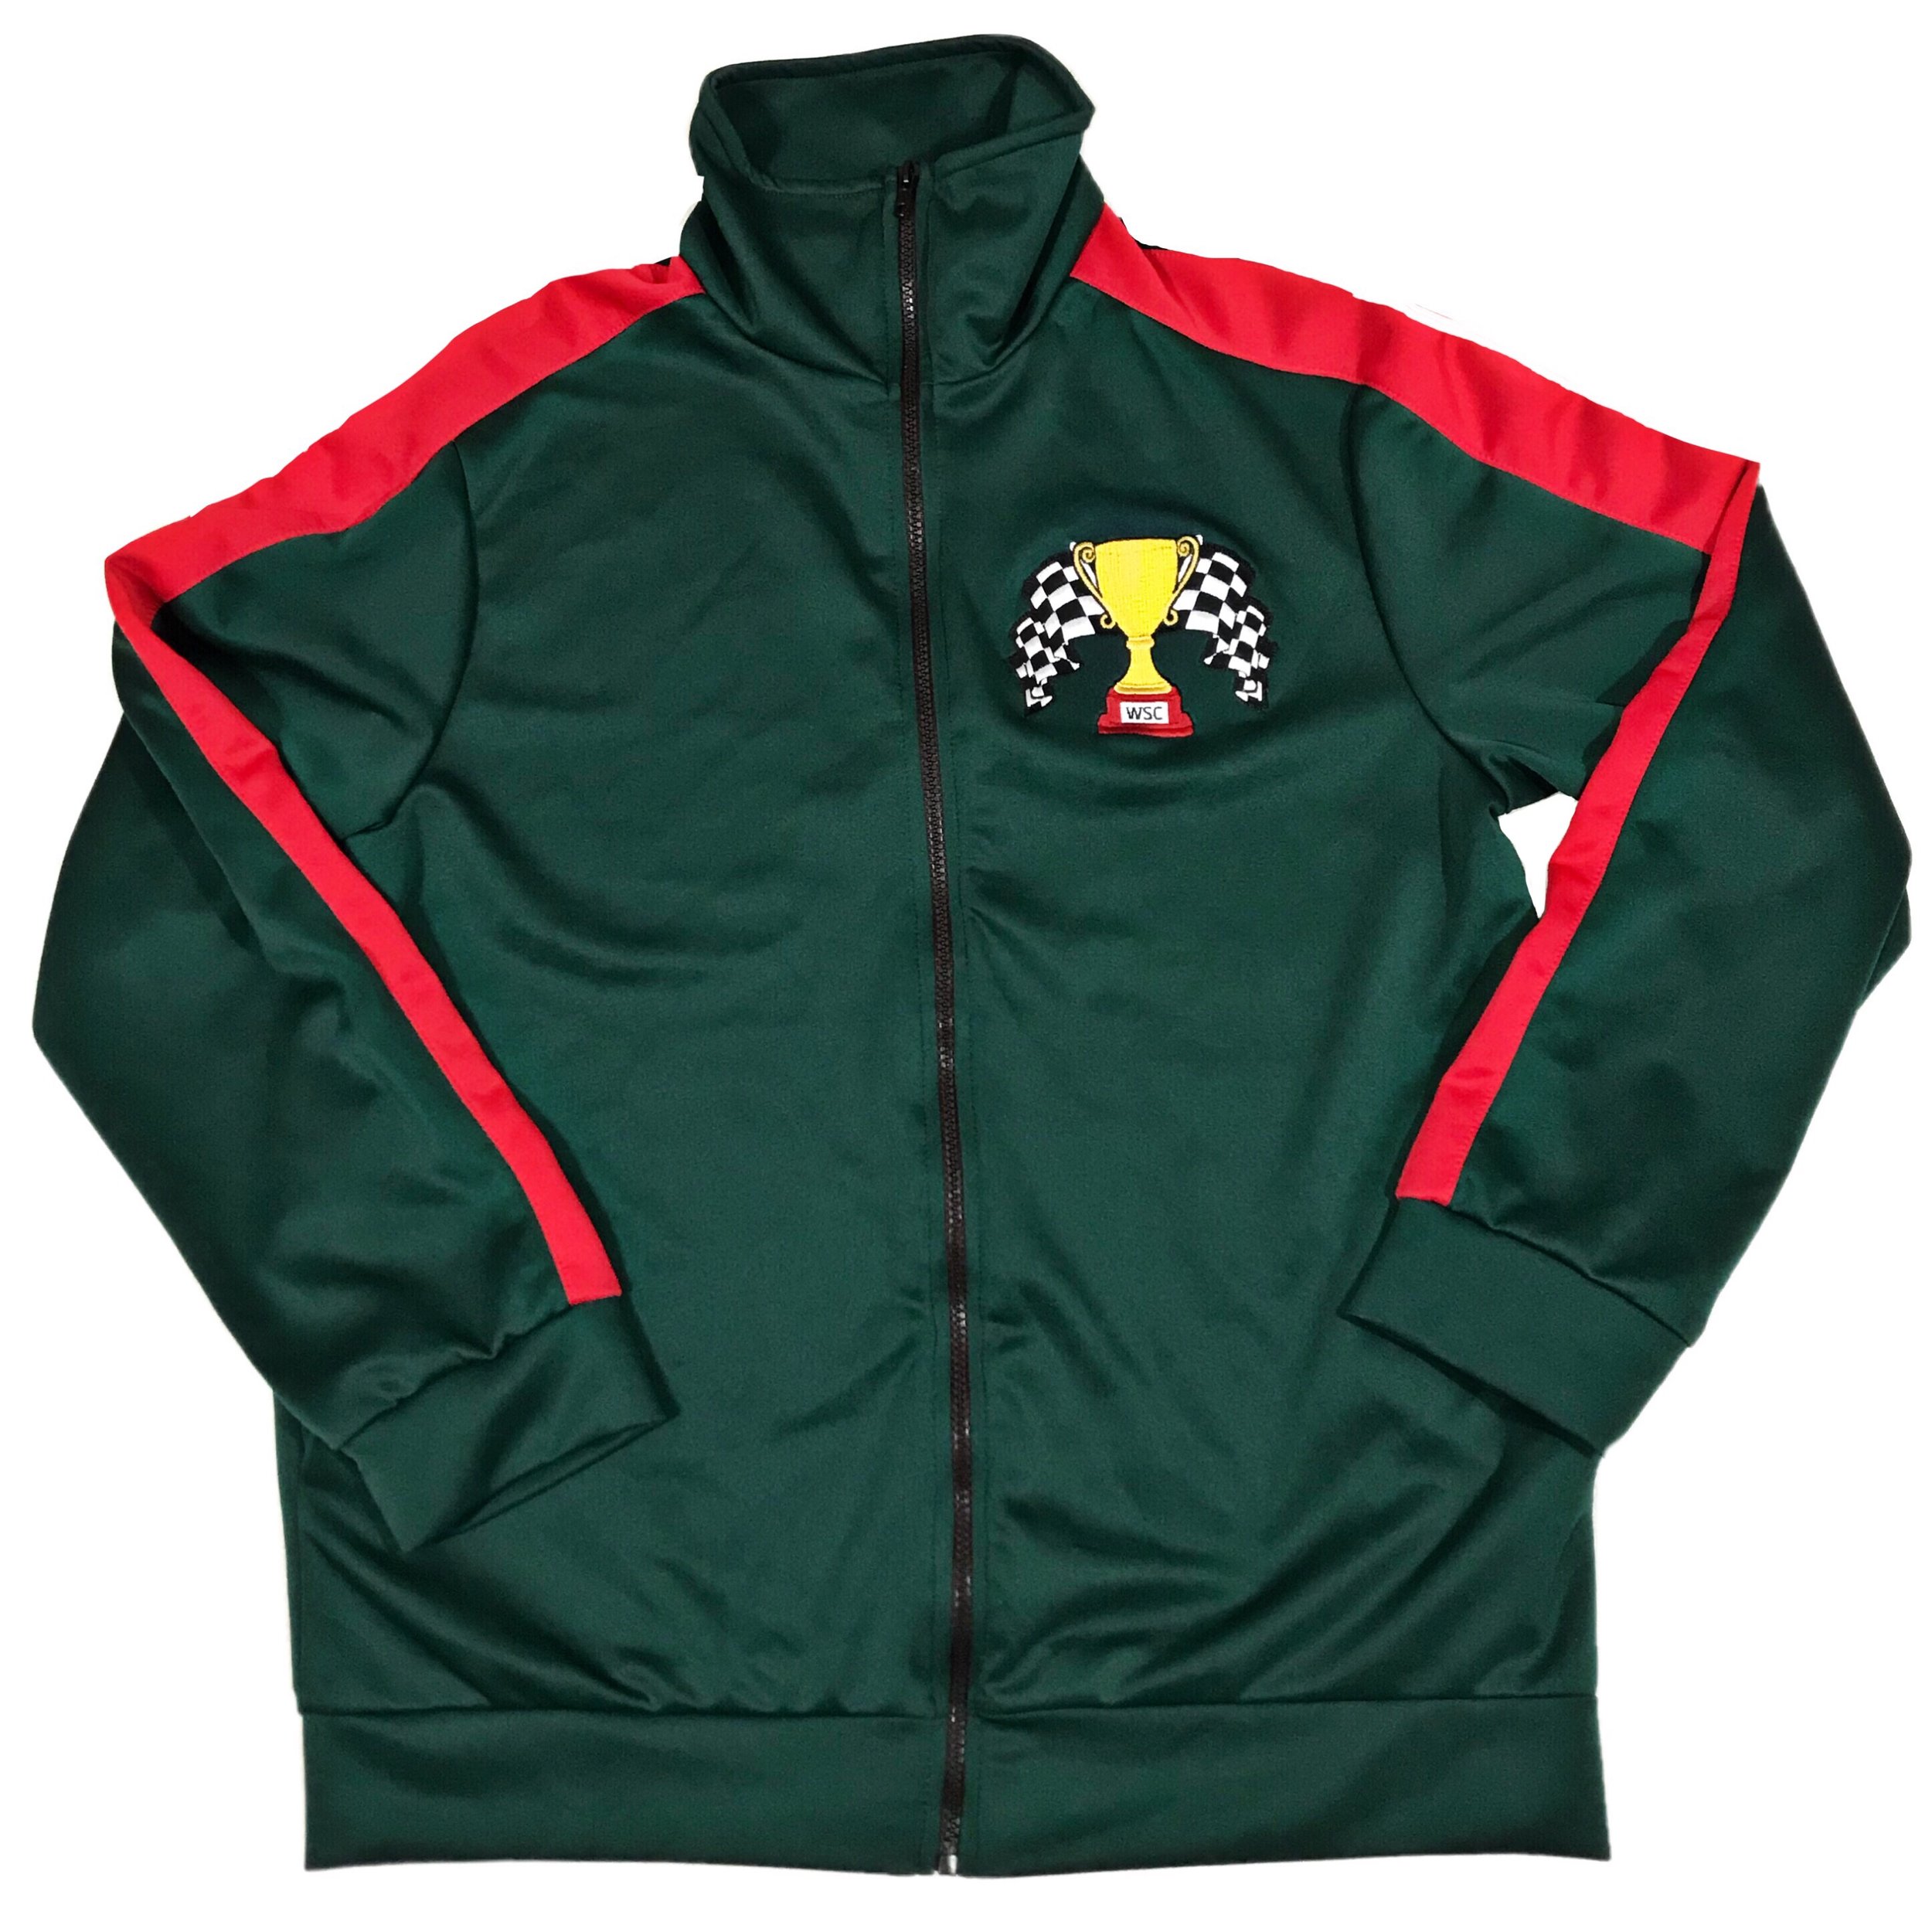 decathlon track jacket